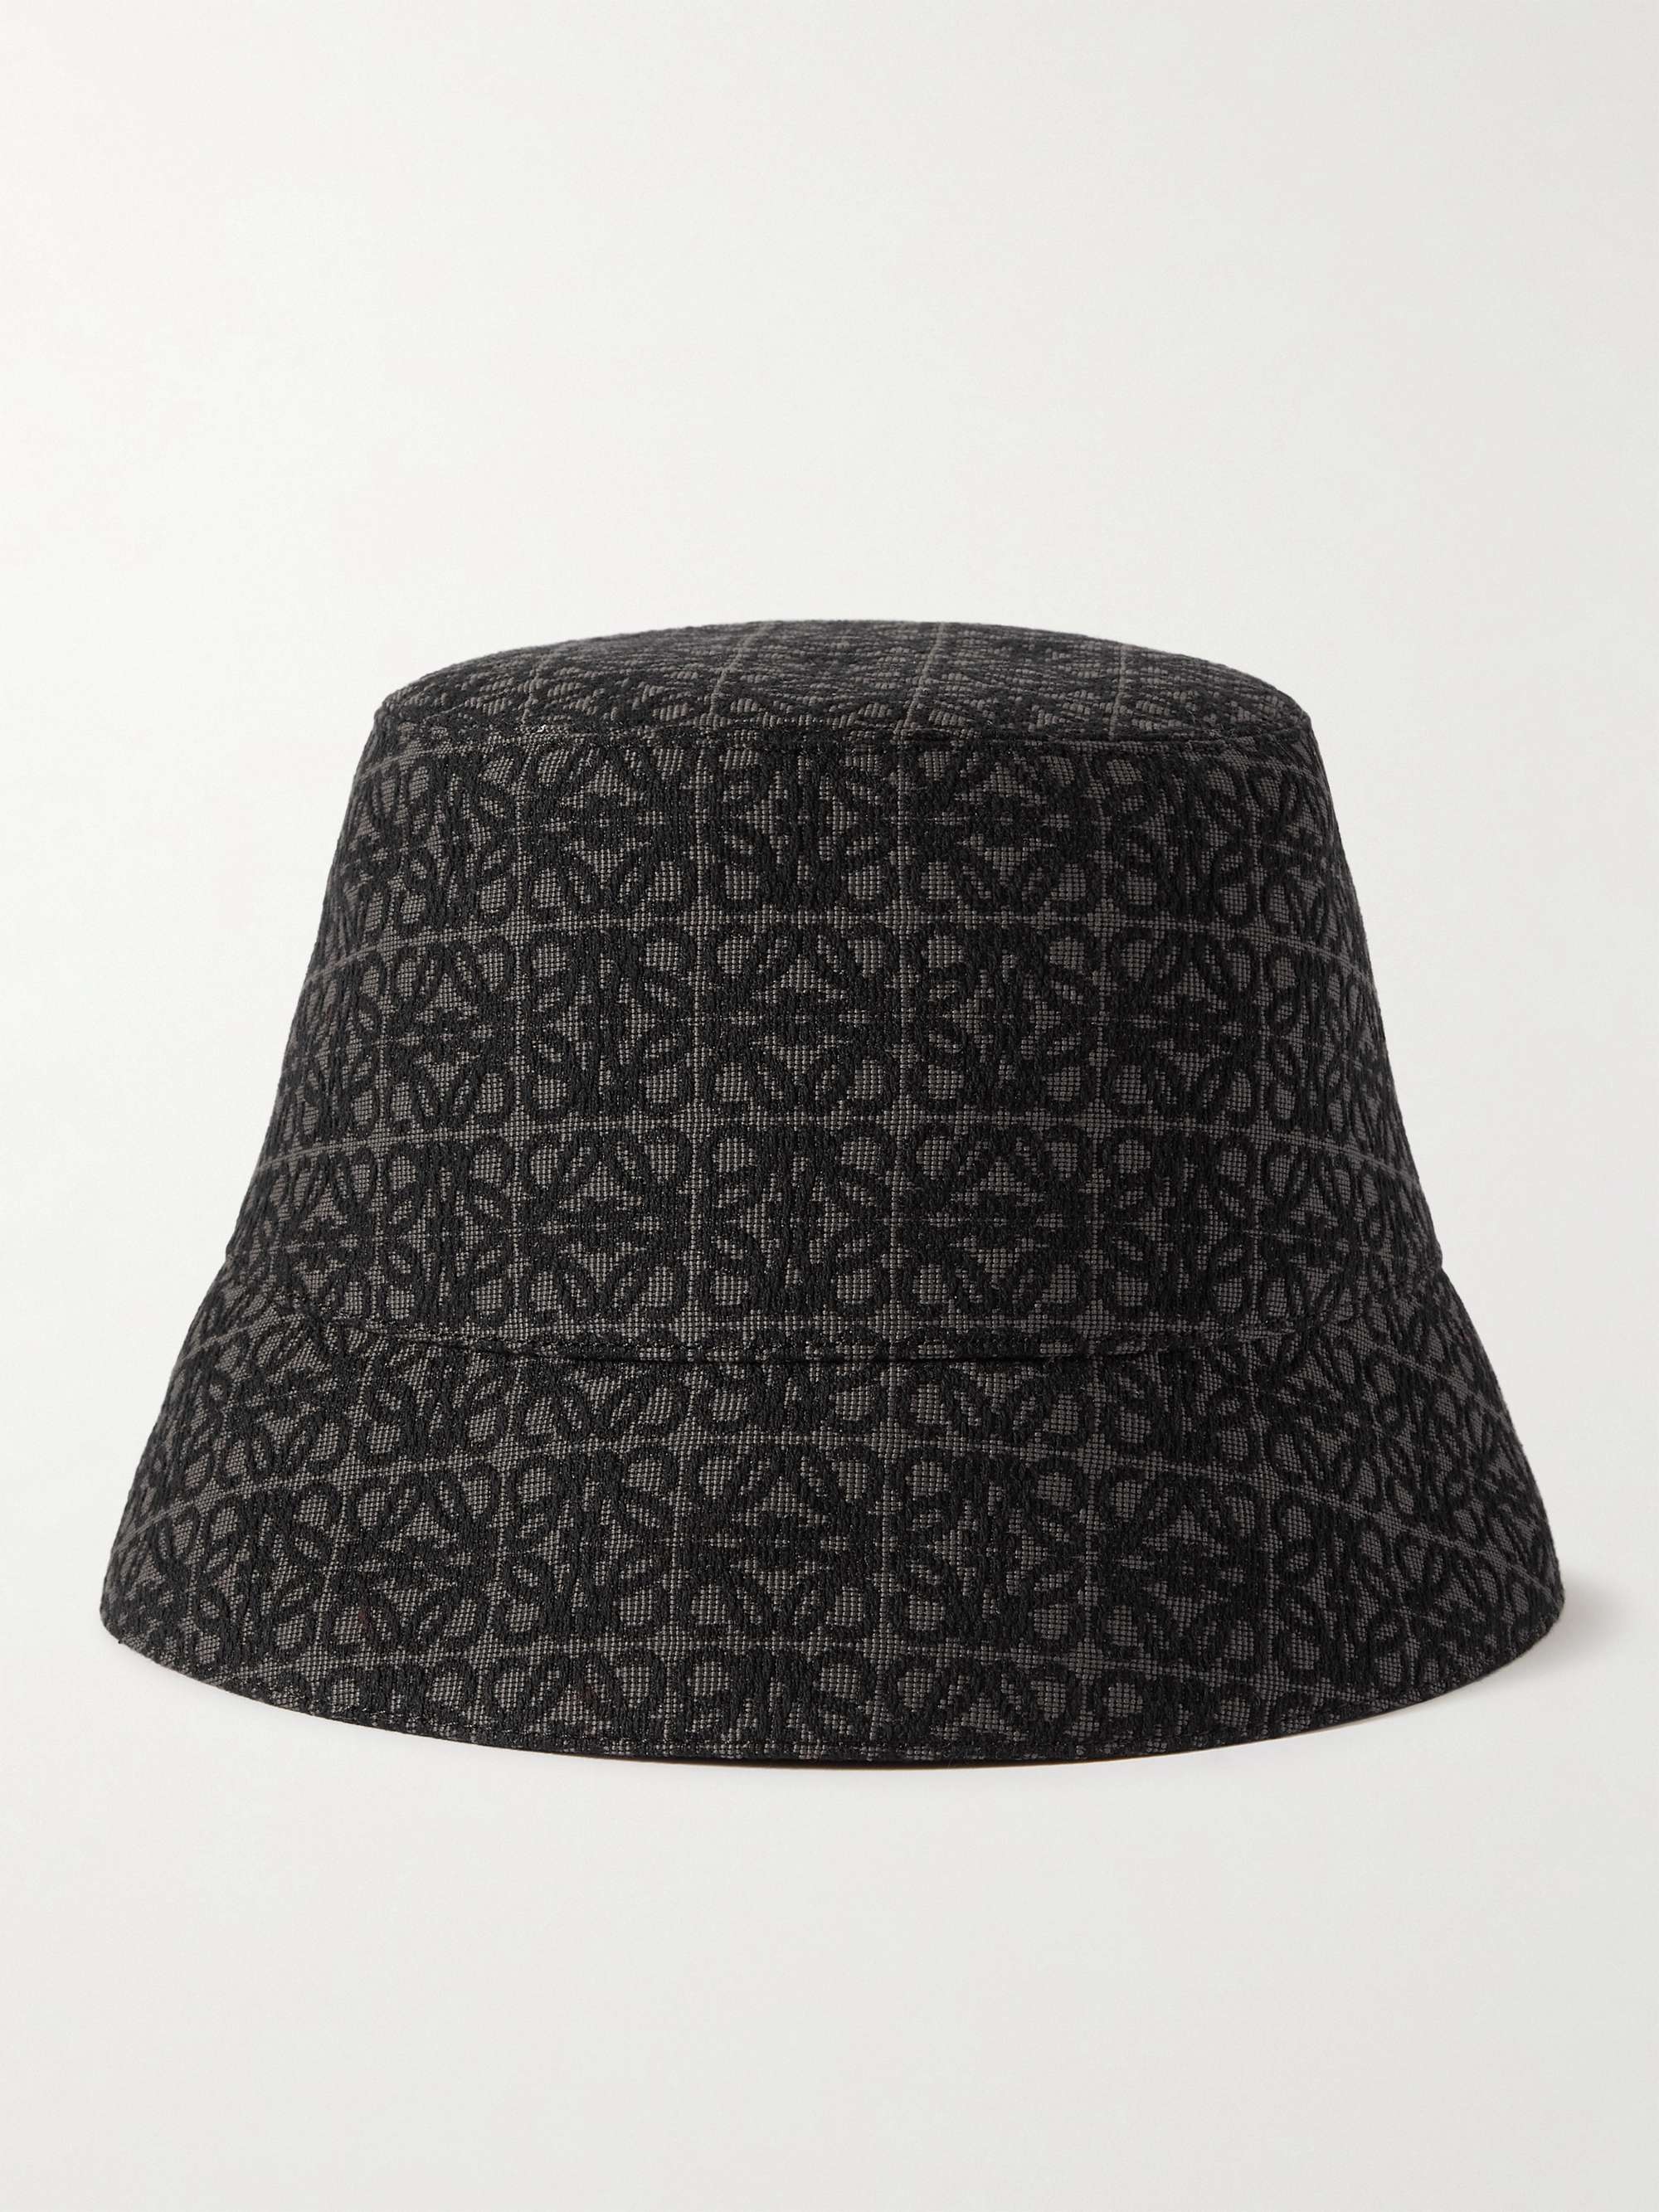 LOEWE Reversible Logo-Jacquard Cotton-Blend and Shell Bucket Hat